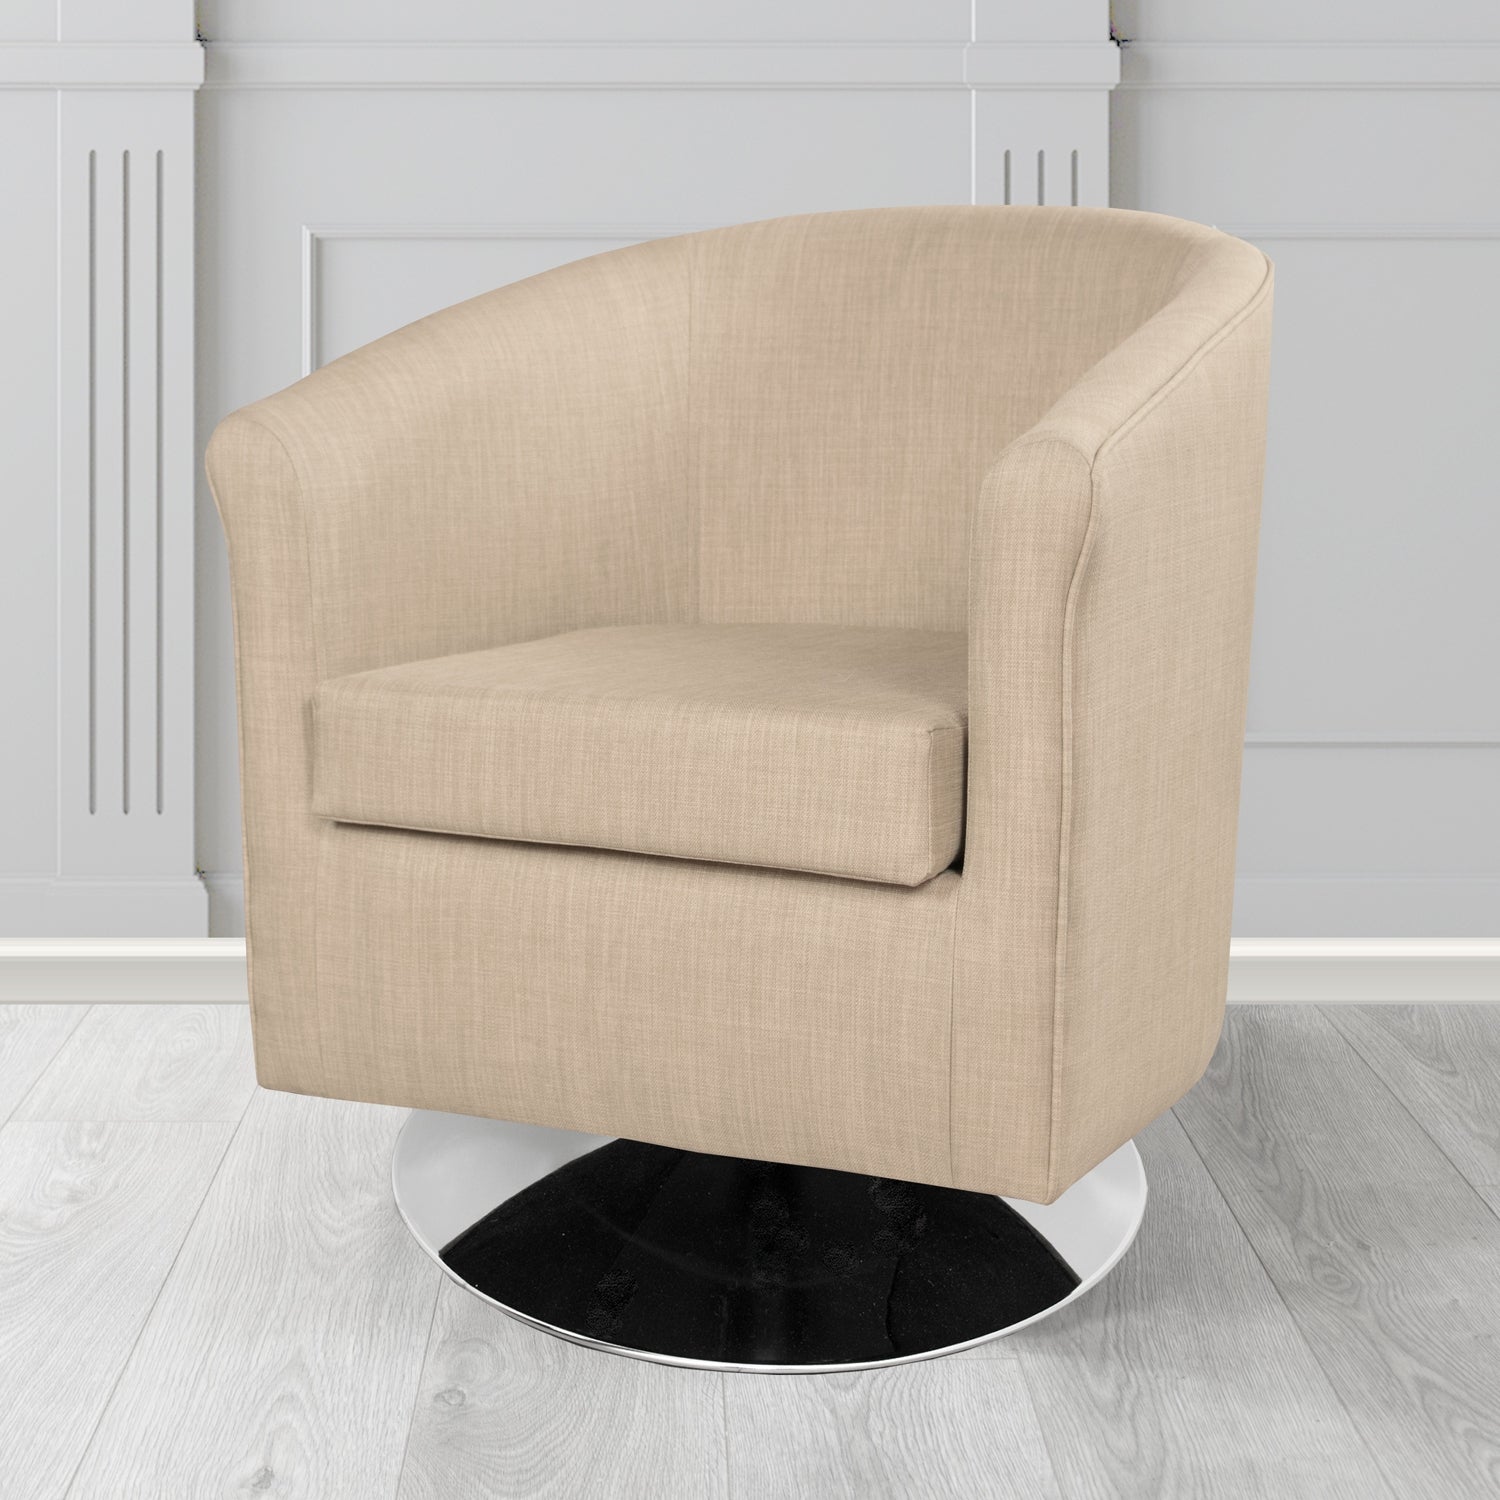 Tuscany Charles Sand Plain Linen Fabric Swivel Tub Chair - The Tub Chair Shop